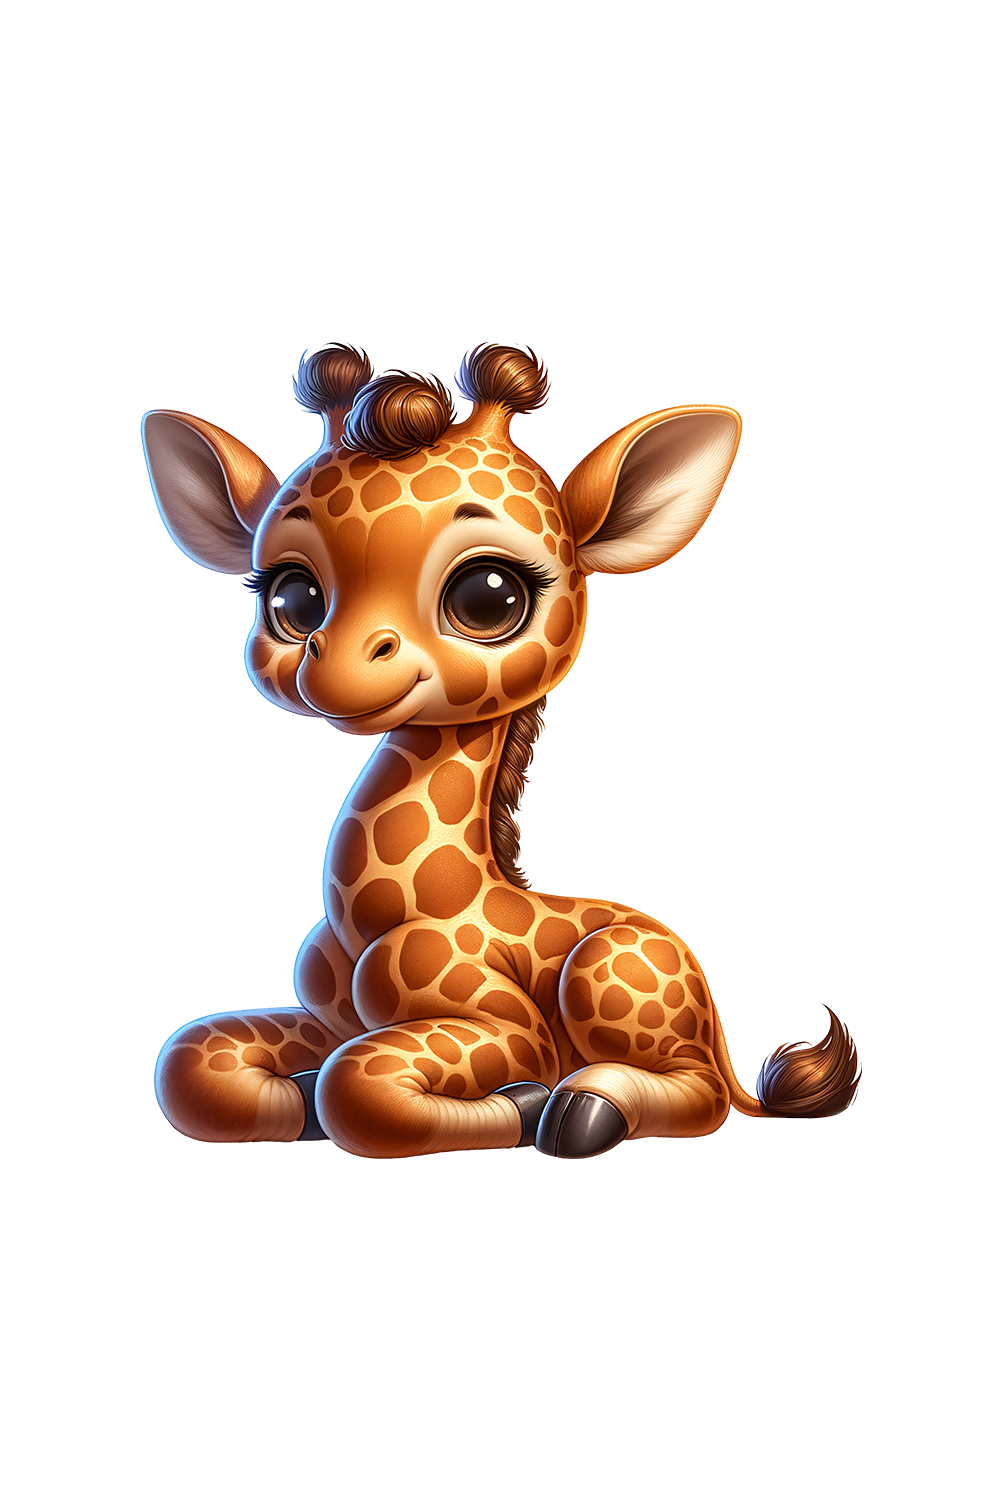 Cute Giraffe Clipart | Animals Clipart | PNG pinterest preview image.